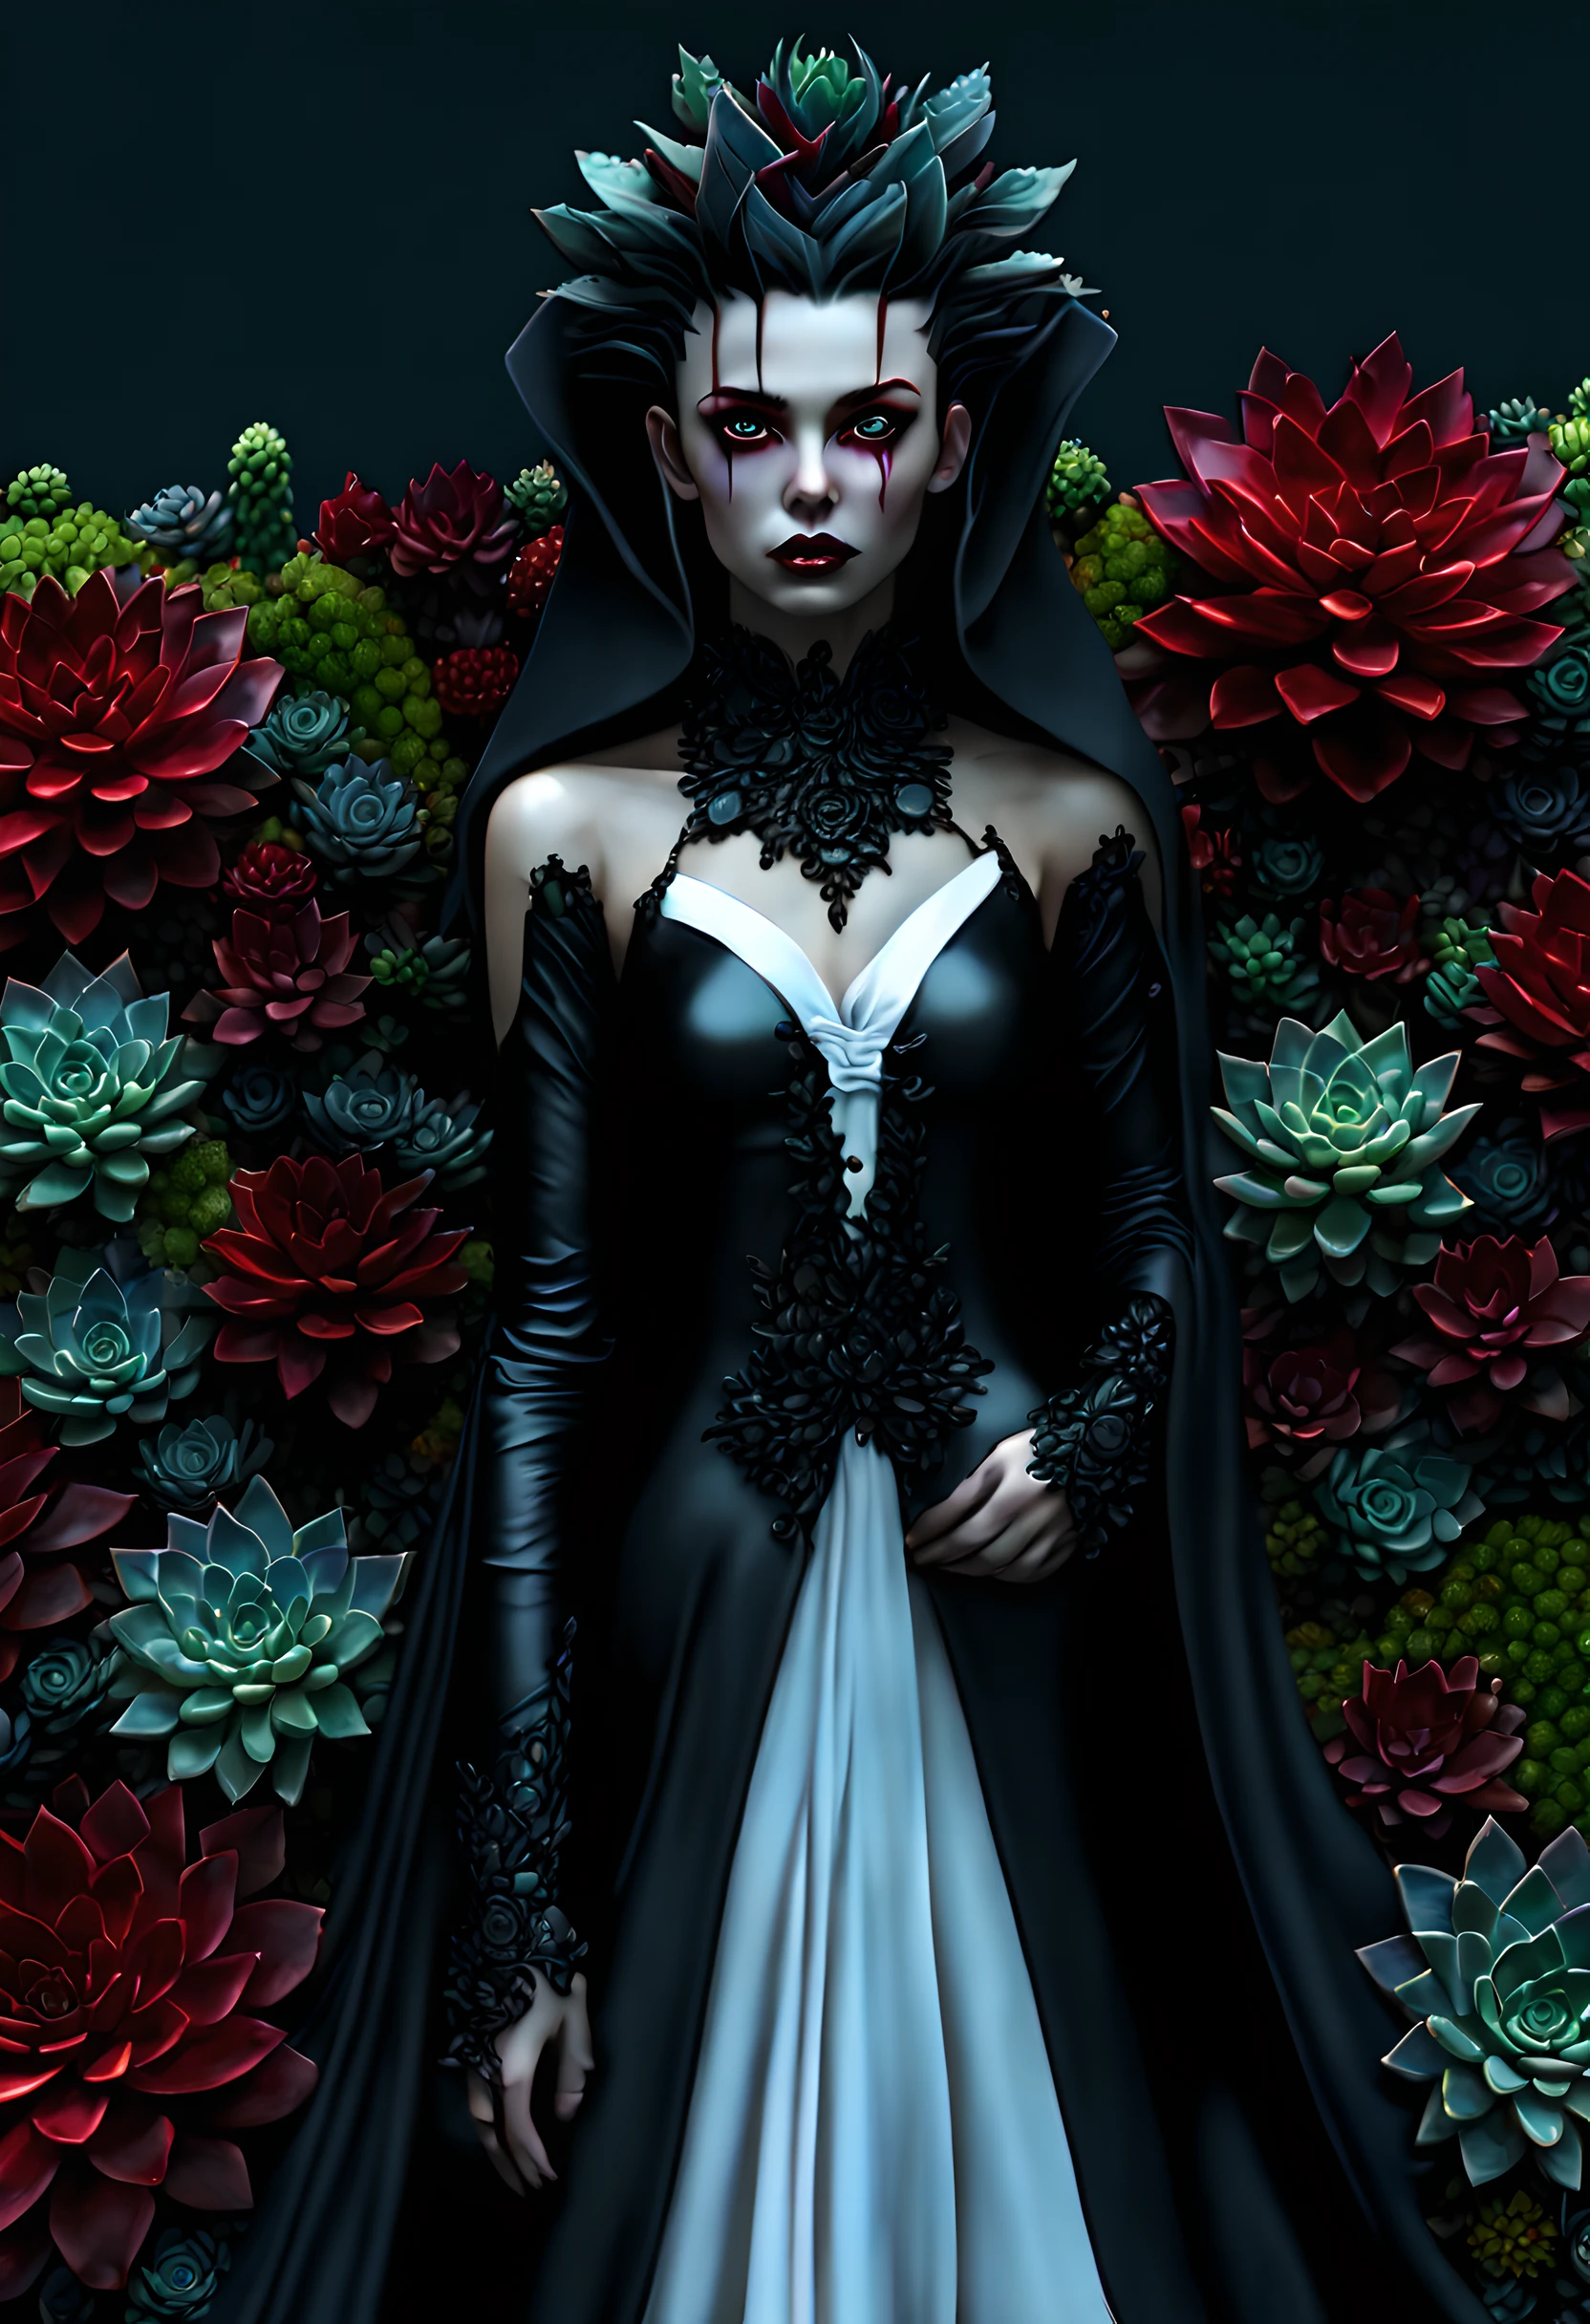 picture of a vampire woman 休息 a (黑色的:1.2) 和 (红色的:1.2) colo红色的 succulents meadow, 全身, 精致美丽 (极其详细, 杰作, 最好的质量: 1.4) 女 吸血鬼 女人, 动态角度 (最好详细, 杰作, 最好的质量), 极其详细 face (极其详细, 杰作, 最好的质量), 极度女性化, 灰色皮肤, 金发, 卷发, 动态眼睛颜色, 冷眼, 发光的眼睛, 专注的目光, dark 红色的 lips, [尖牙], 穿着白色连衣裙, 优雅风格的连衣裙 (极其详细, 杰作, 最好的质量), 穿着蓝色斗篷 (极其详细, 杰作, 最好的质量), 长斗篷, 飘逸斗篷 (极其详细, 杰作, 最好的质量), 穿高跟靴, 休息 (黑色的 和 红色的 colo红色的 succulents meadow: 1.6), 滴血的多肉植物, full colo红色的, (完美光谱: 1.3),( 充满活力的工作: 1.4) vibrant shades of 红色的, 和 黑色的) 月亮升起, 月光, 晚上, 高细节, 幻想艺术, RPG art 最好的质量, 16千, [极其详细], 杰作, 最好的质量, (极其详细), 全身, 超广角拍摄, 真实感, 公会战争